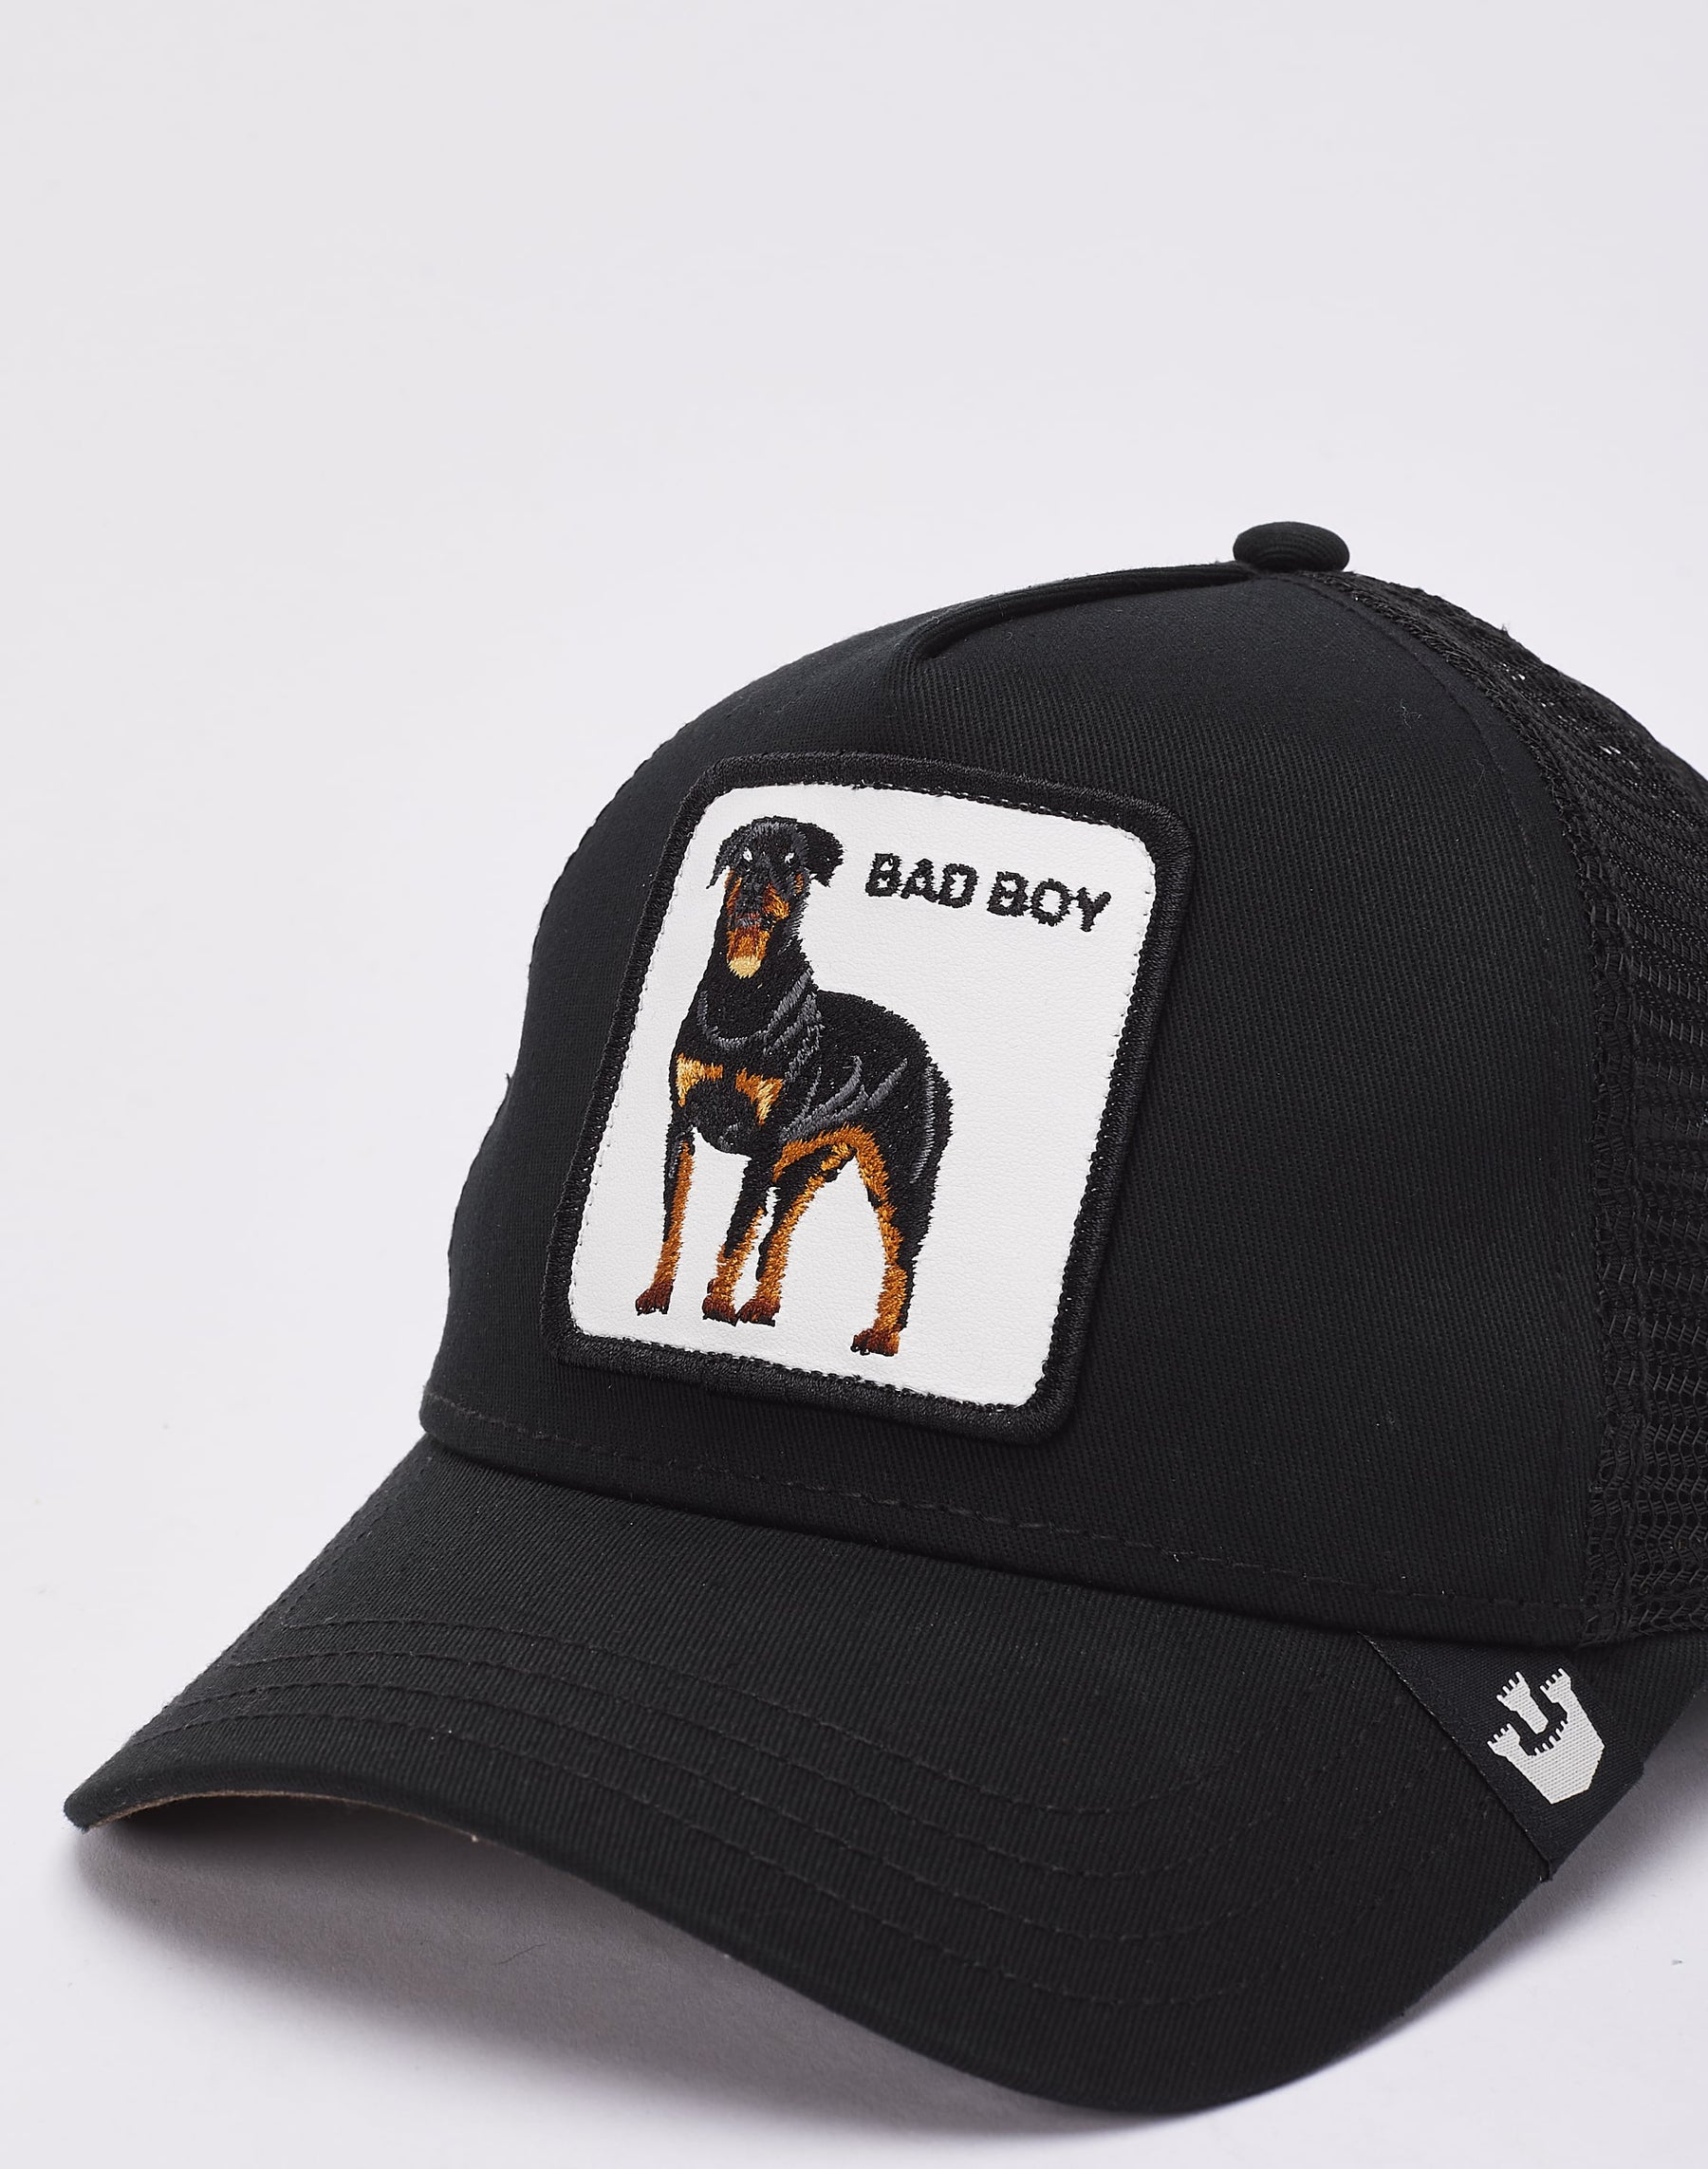 BAD BOY - Black